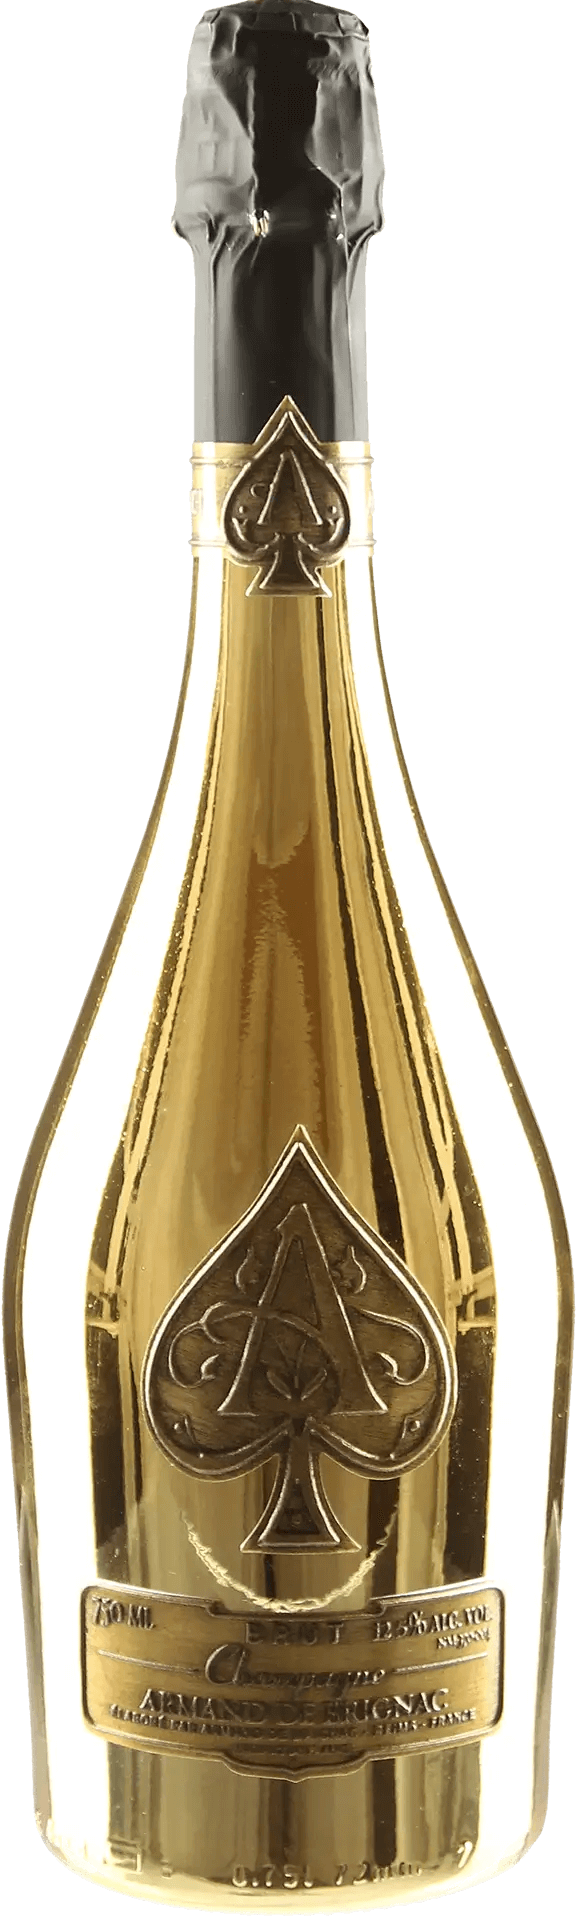 A stunning bottle of Armand de Brignac Ace of Spades Gold Champagne NV, rapper Jay-Z's favourite